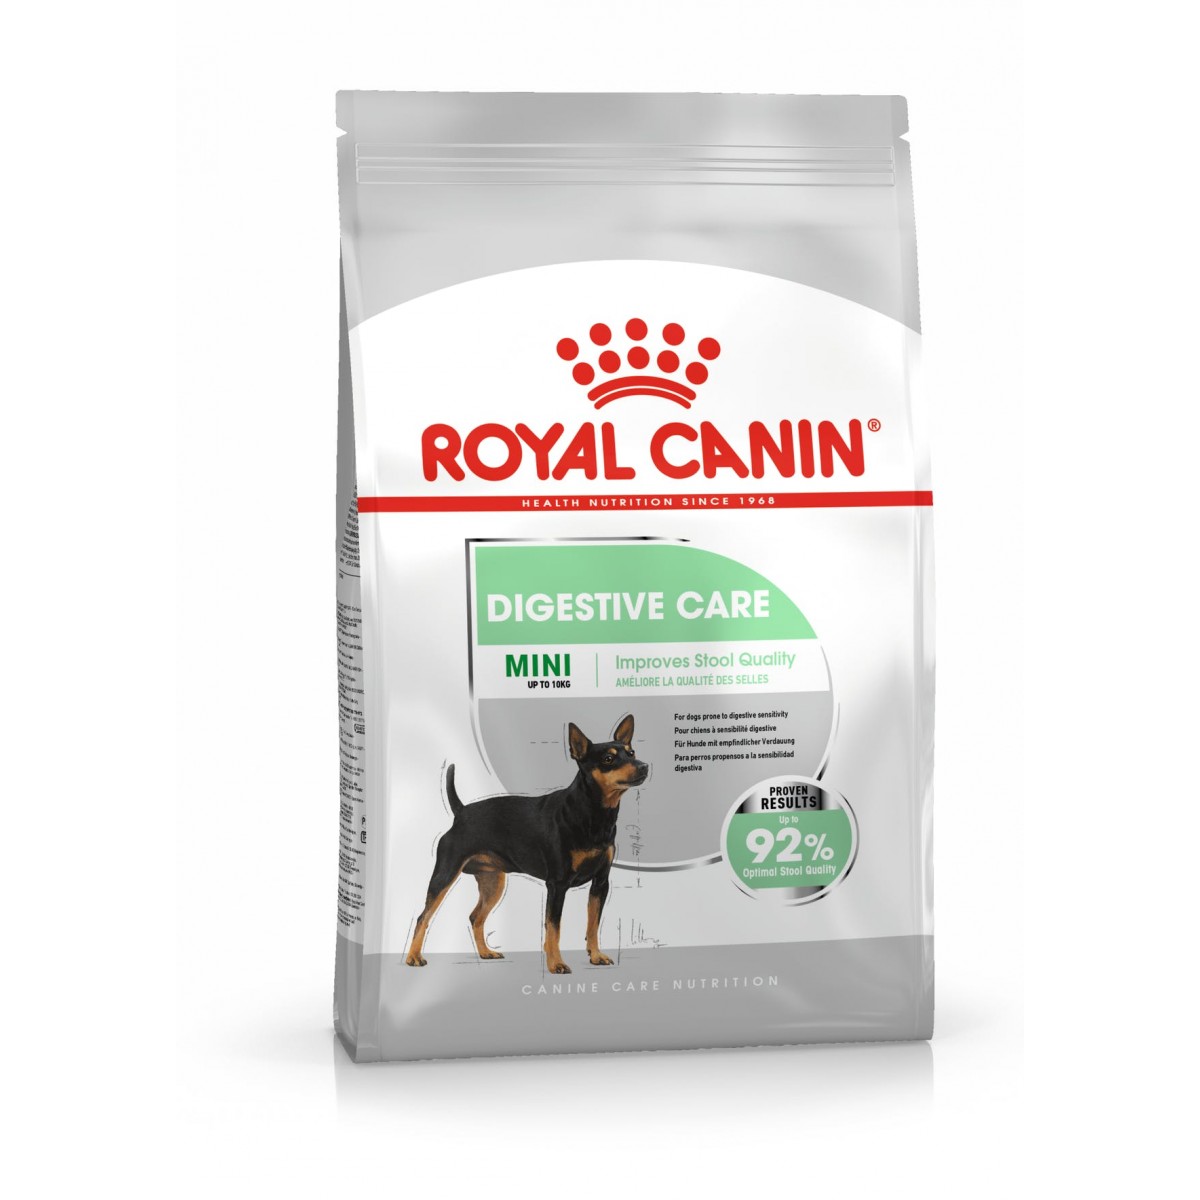 Royal Canin Mini Digestive Care д/соб